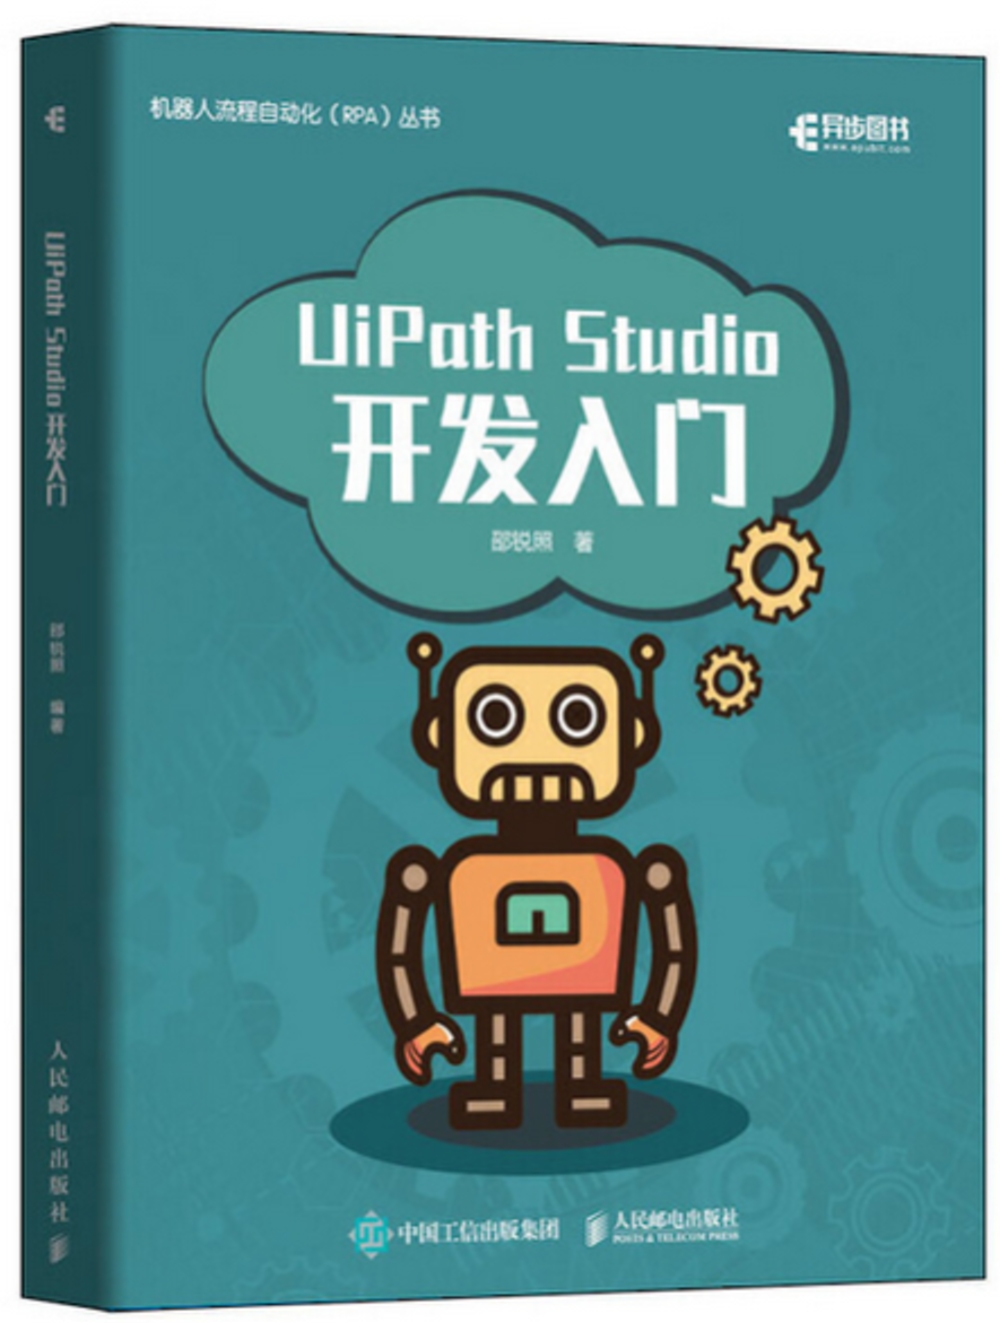 UiPath Studio開發入門